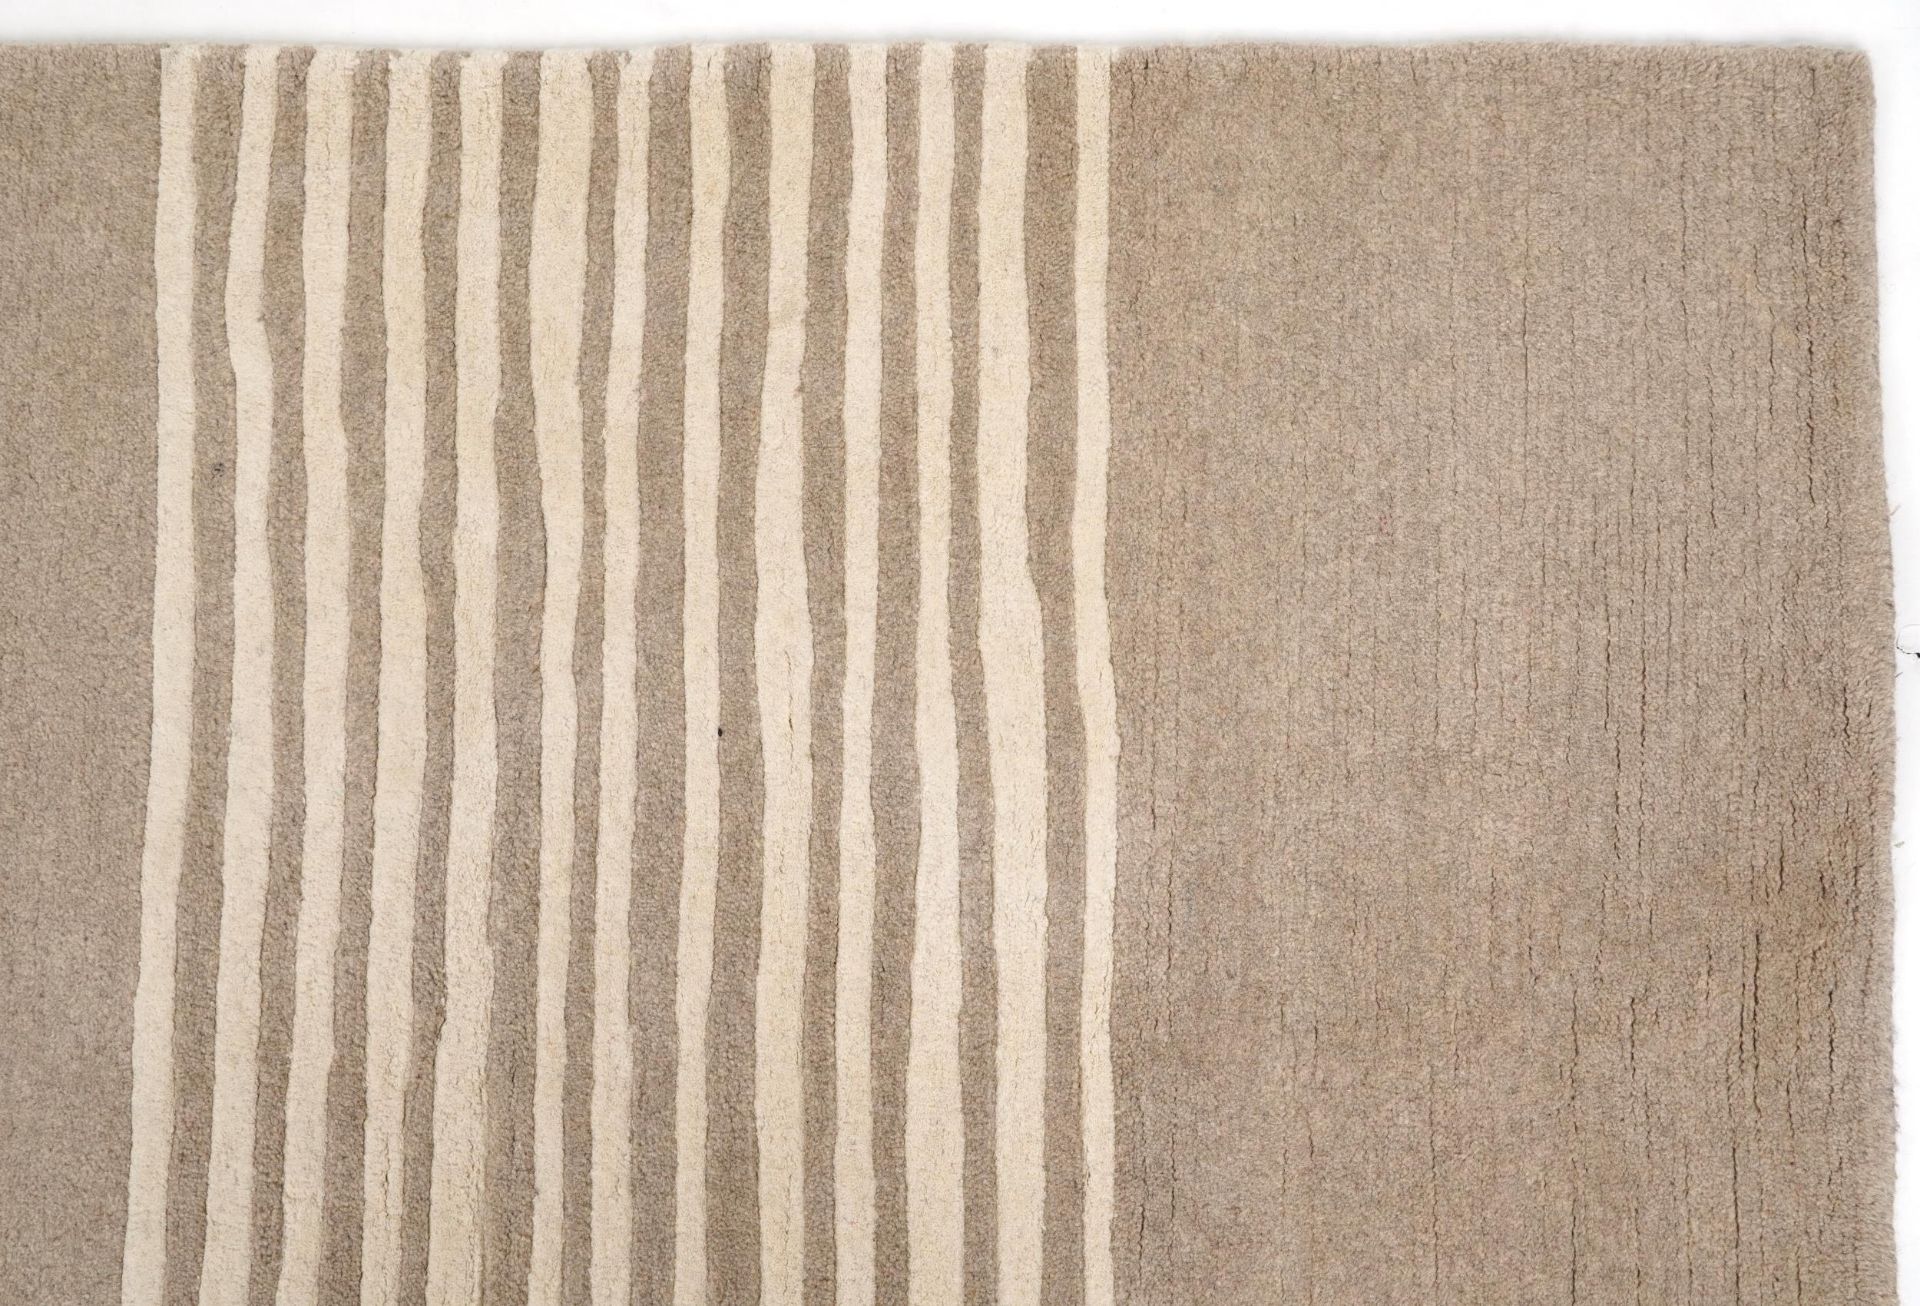 Pair of Kelaty contemporary wool rugs, 180cm x 120cm - Image 11 of 16